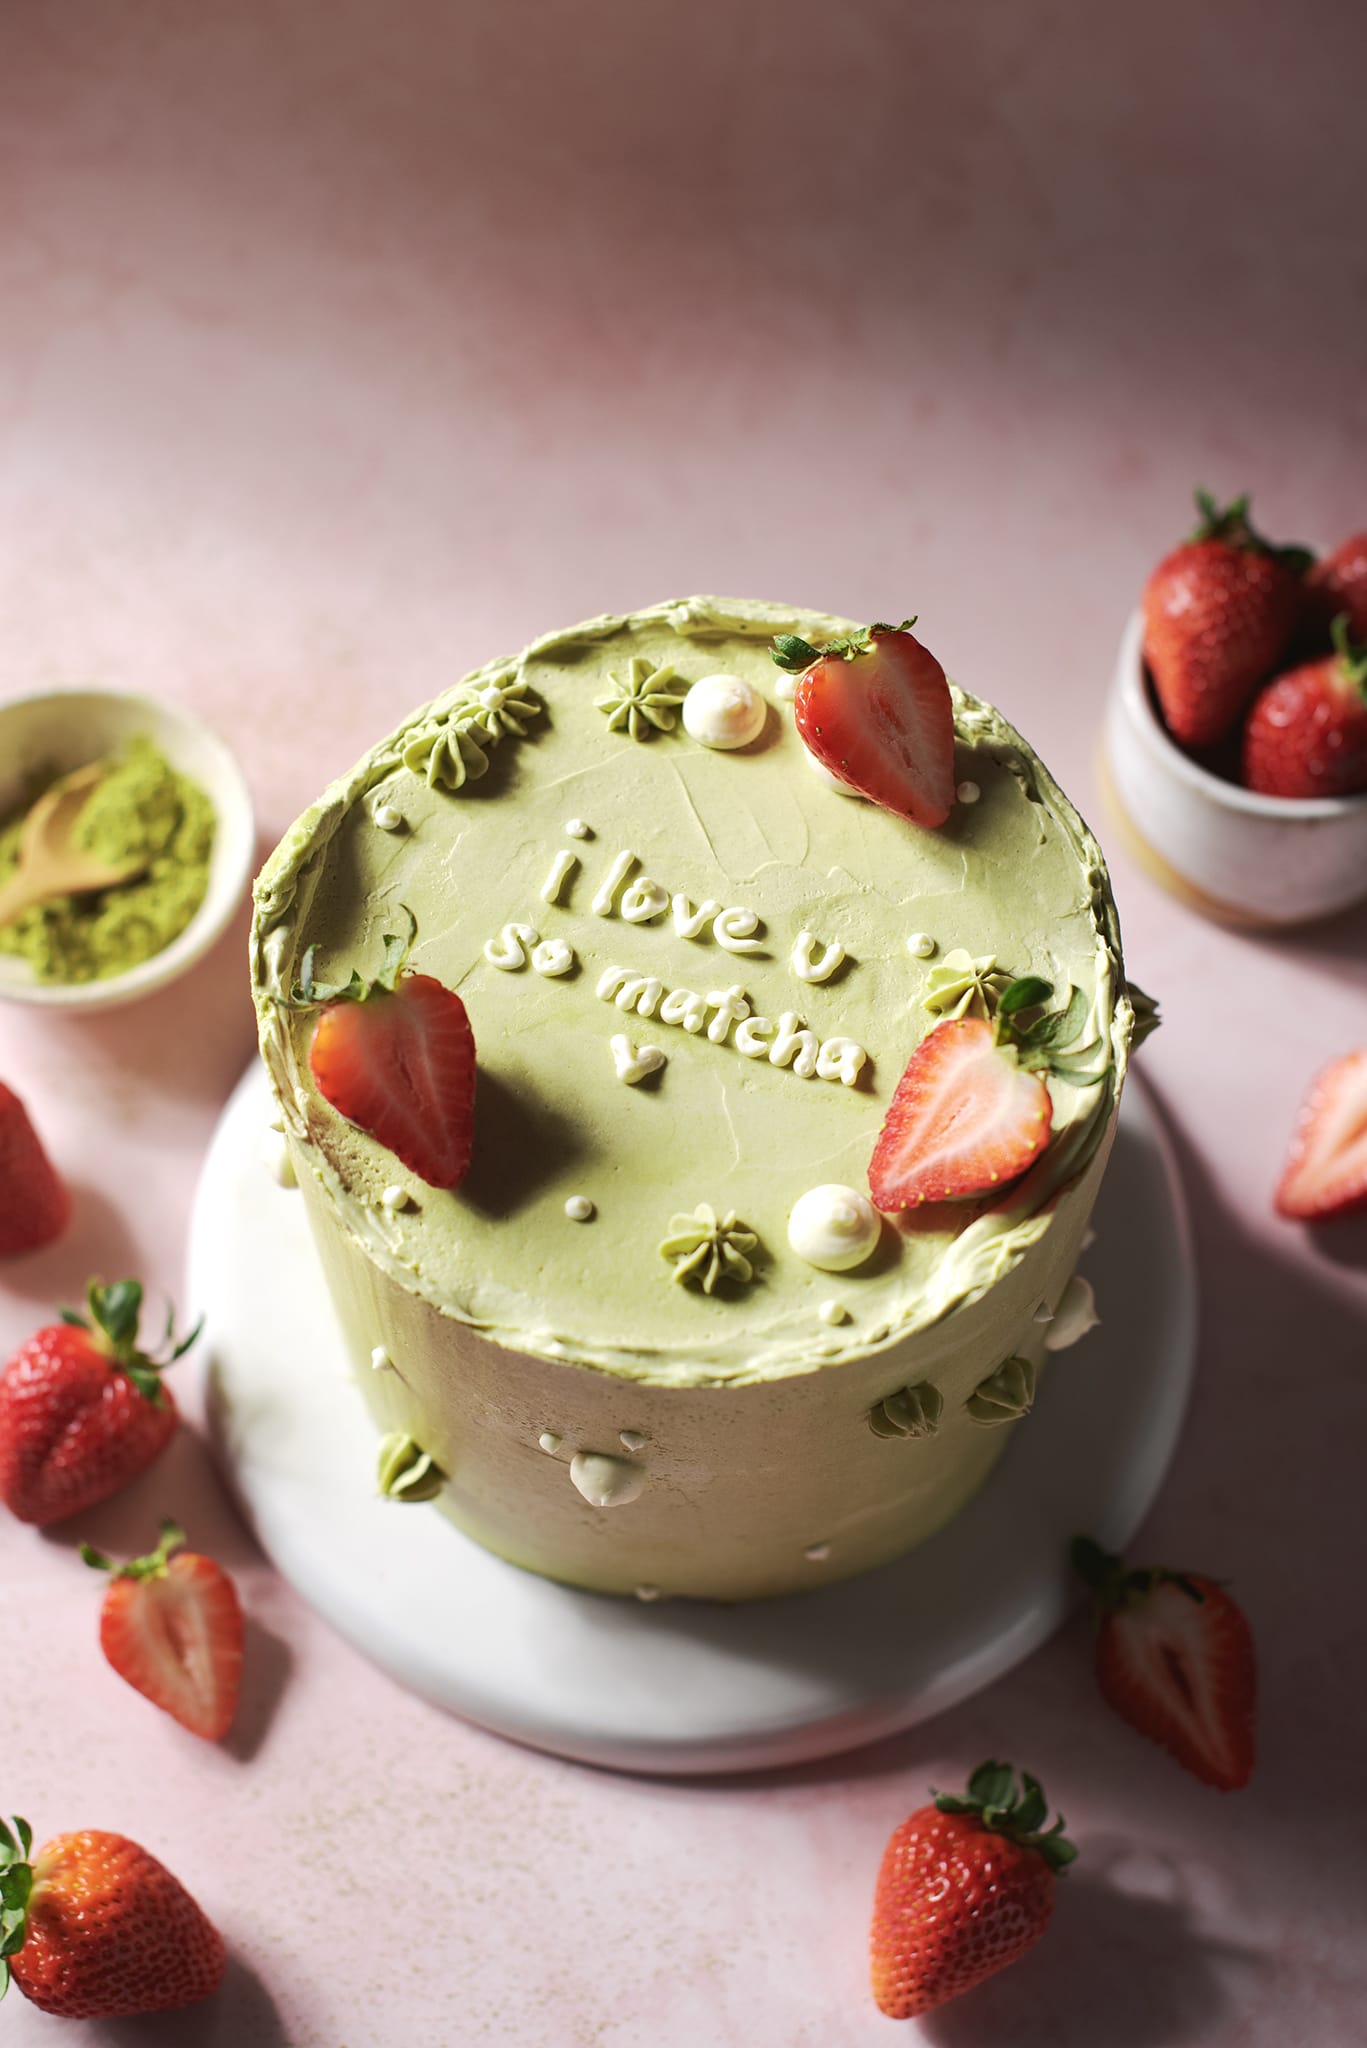 matcha strawberry cake that says “i love u so matcha” on top